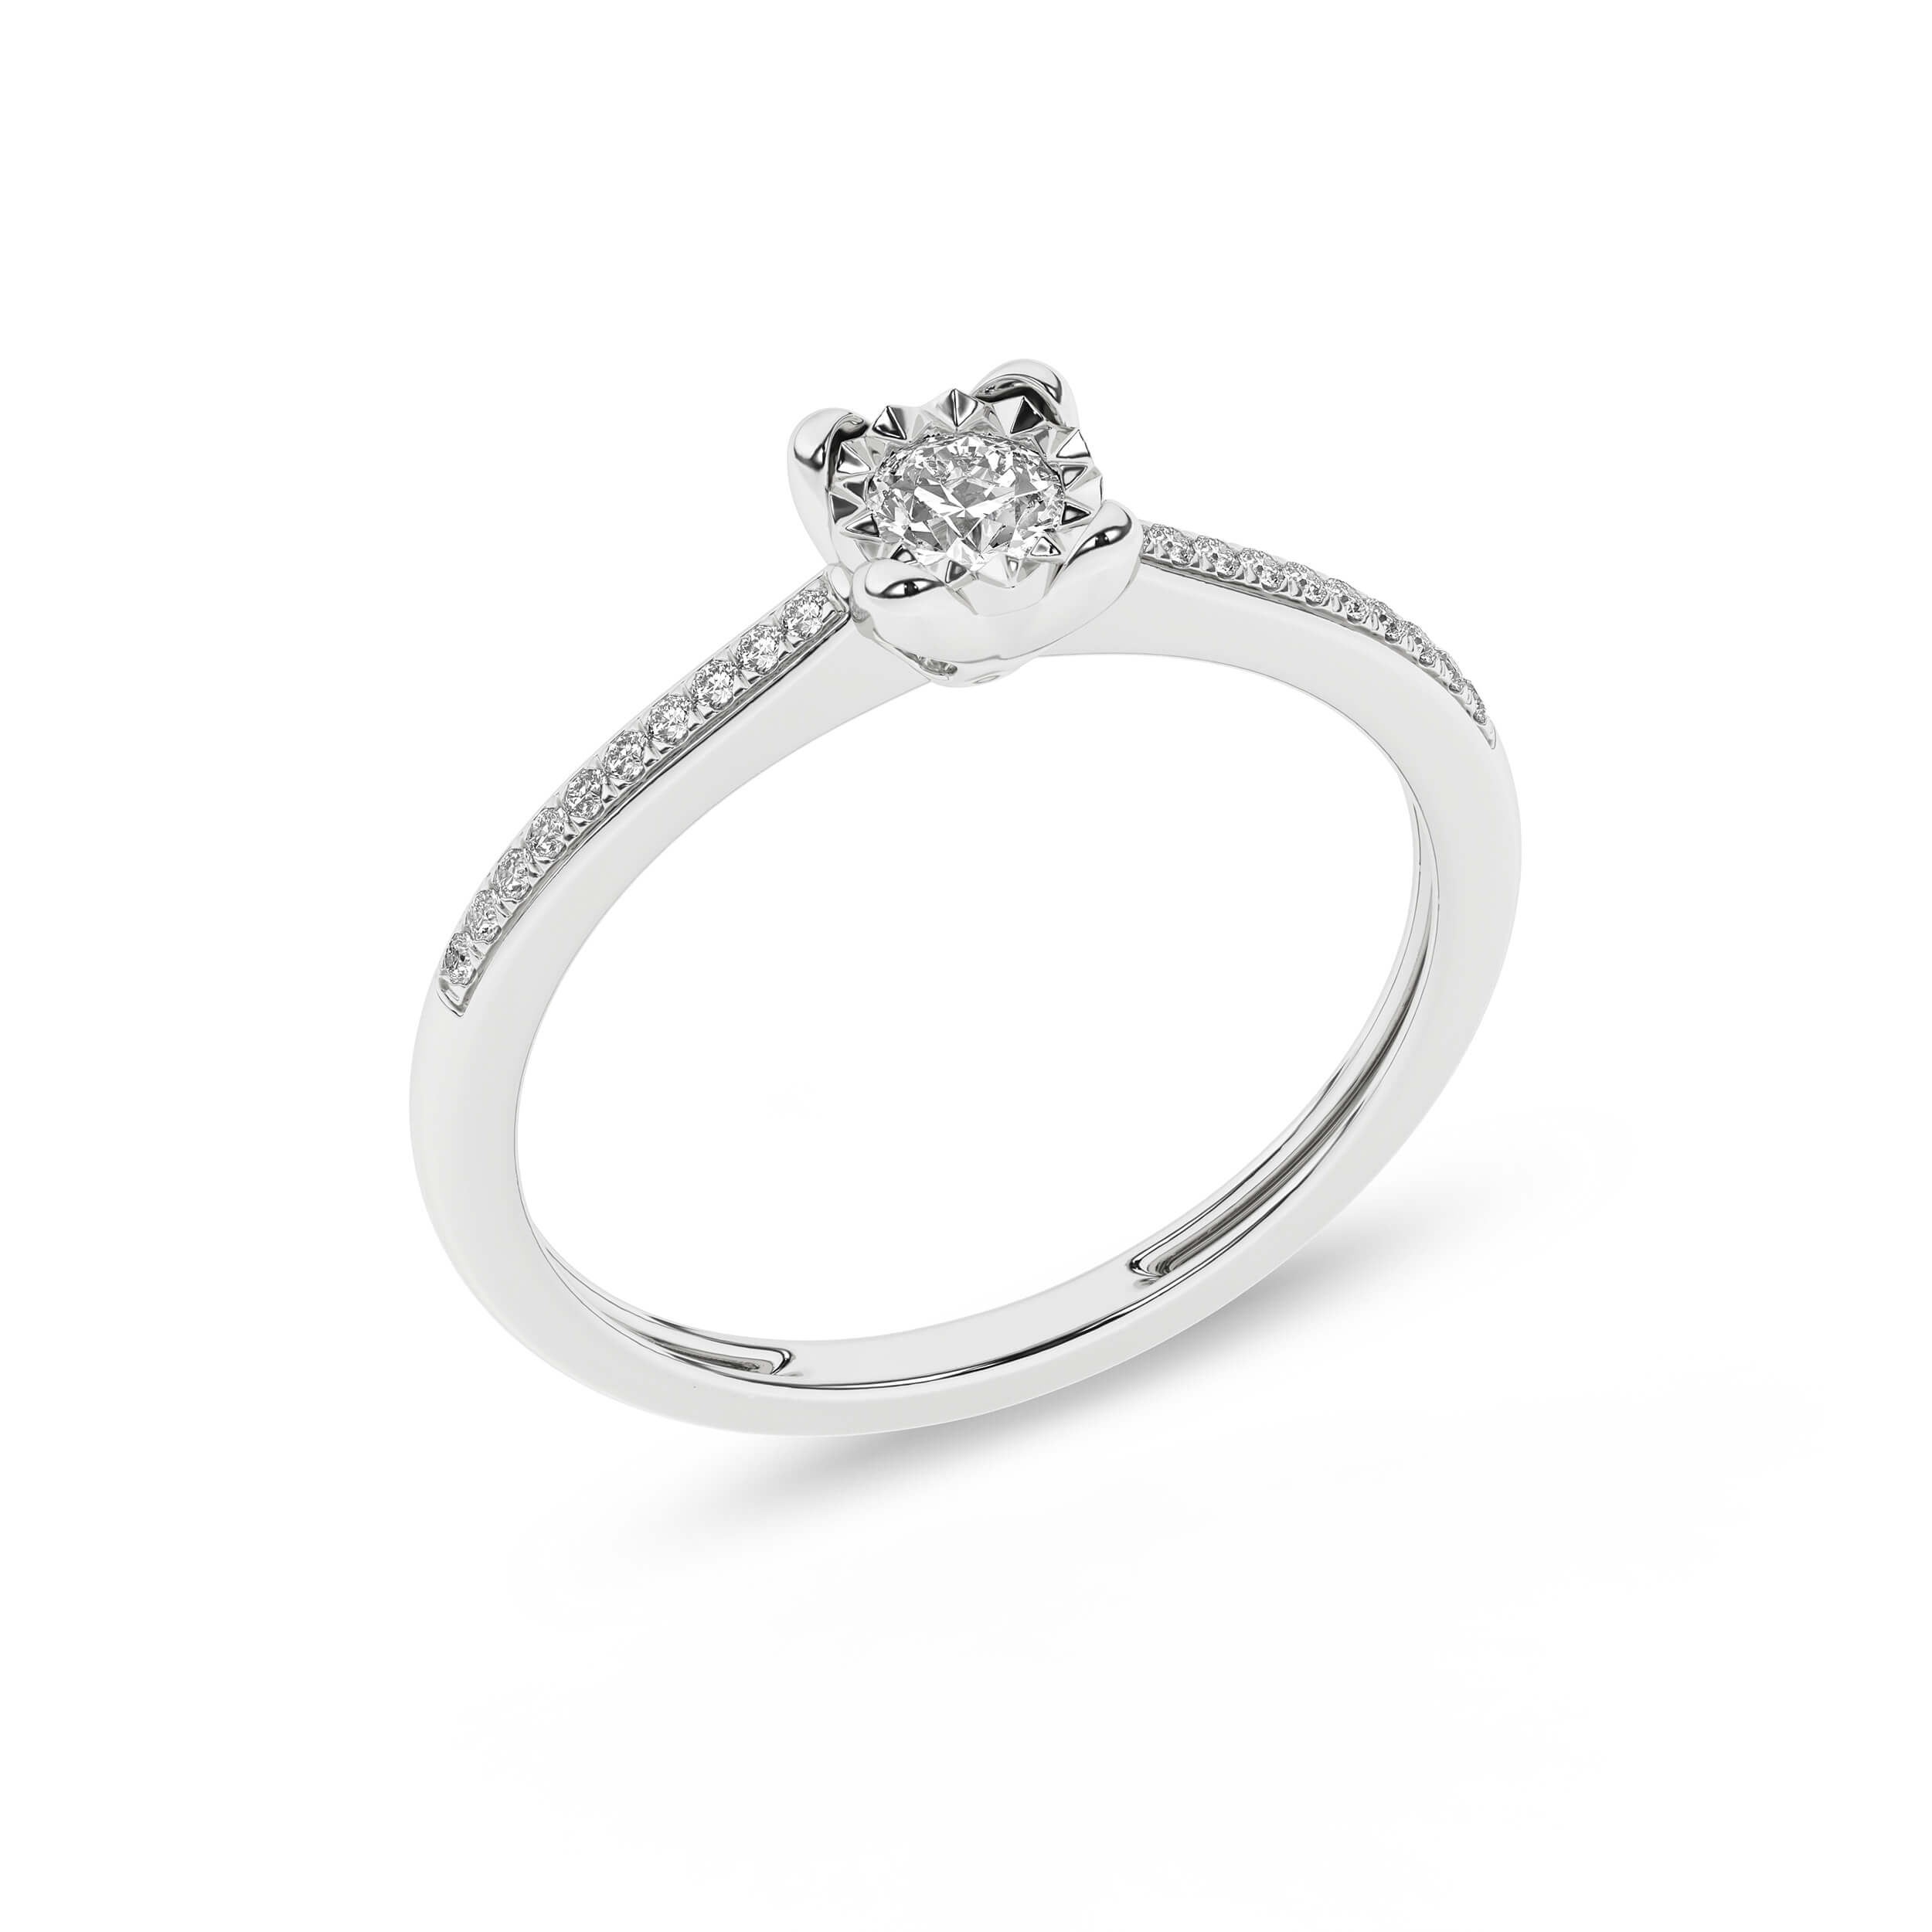 Inel de logodna din Aur Alb 14K cu Diamante 0.15Ct, articol RF11930, previzualizare foto 4